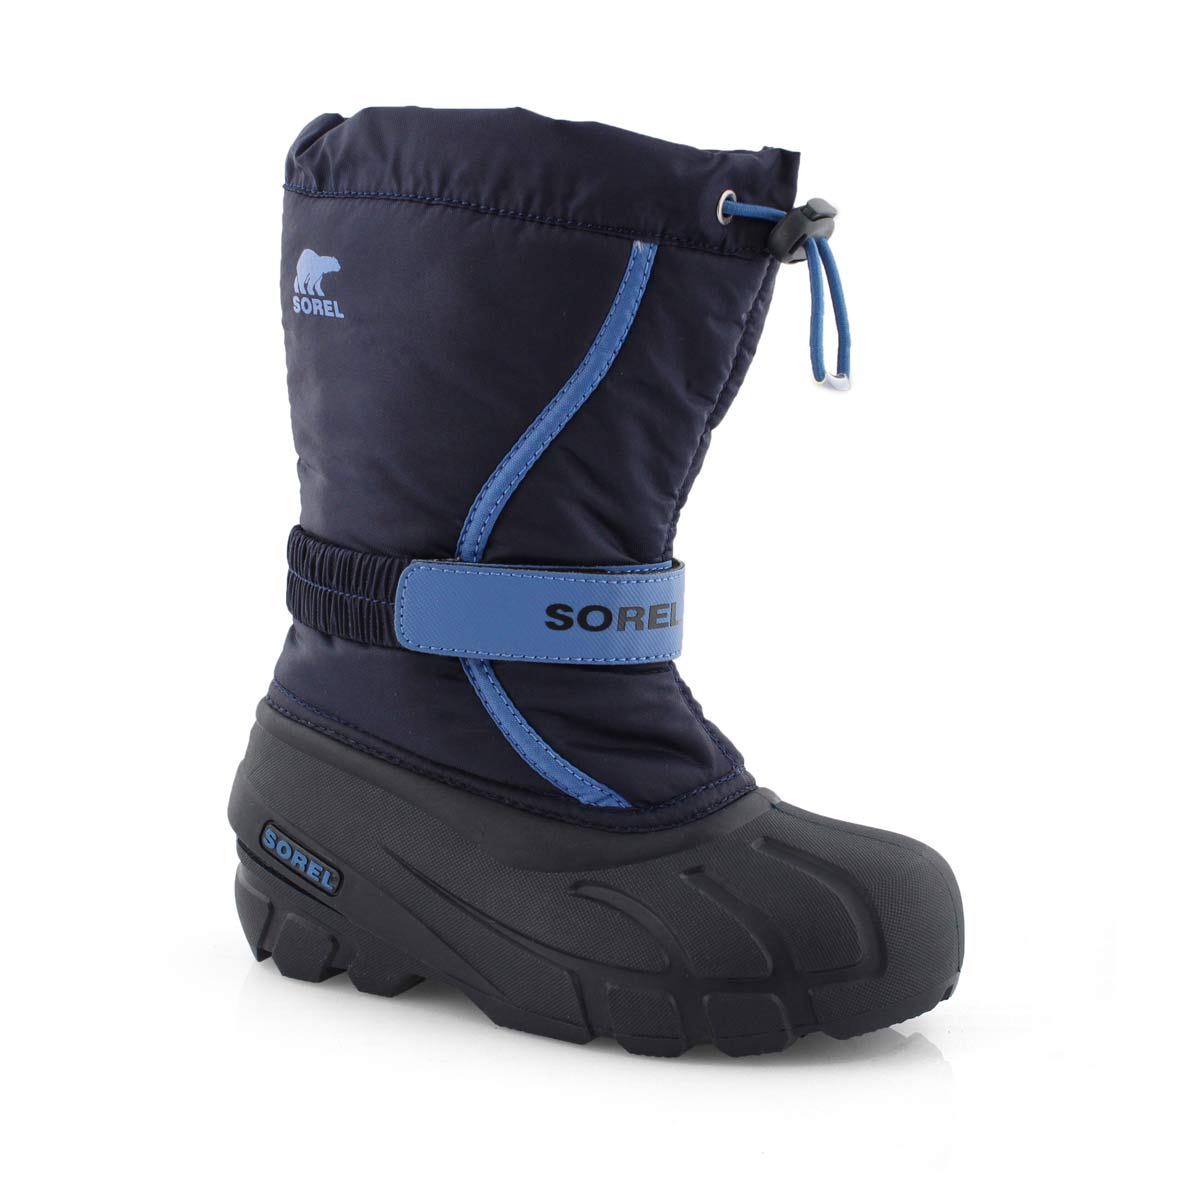 softmoc kids boots